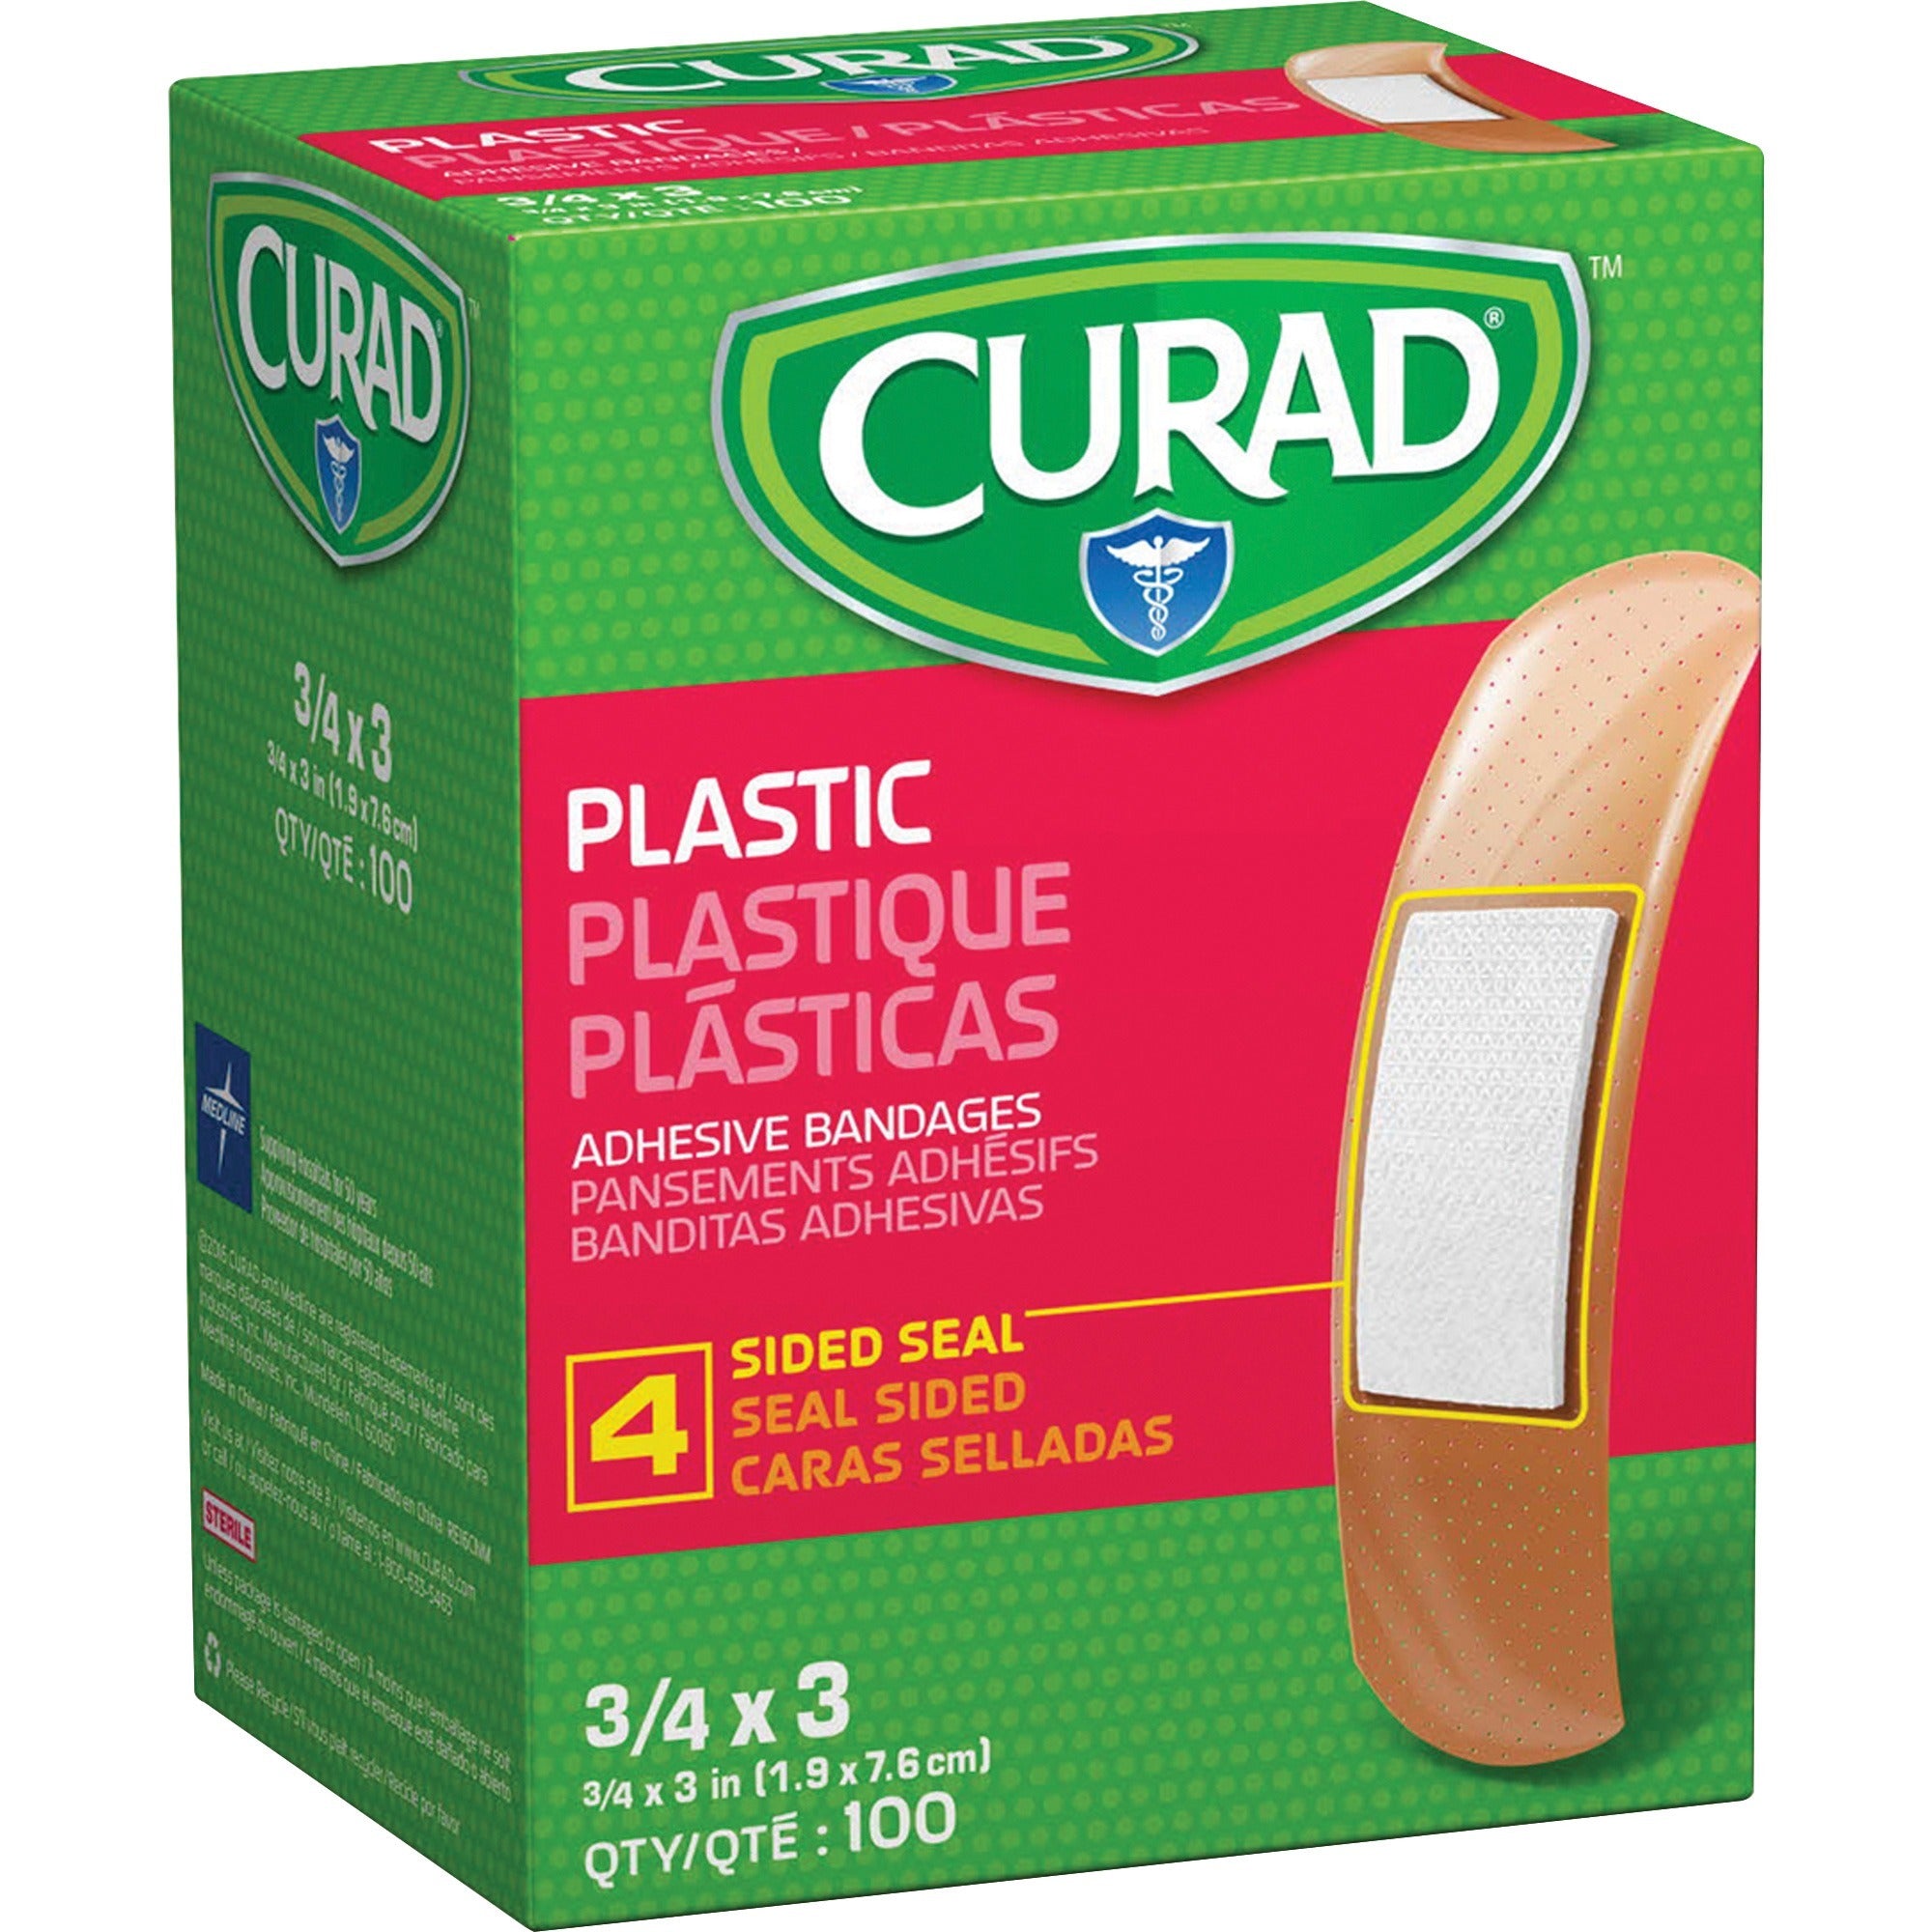 Medline Plastic Adhesive Bandages - 0.75" x 3" - 100/Box - Tan - 